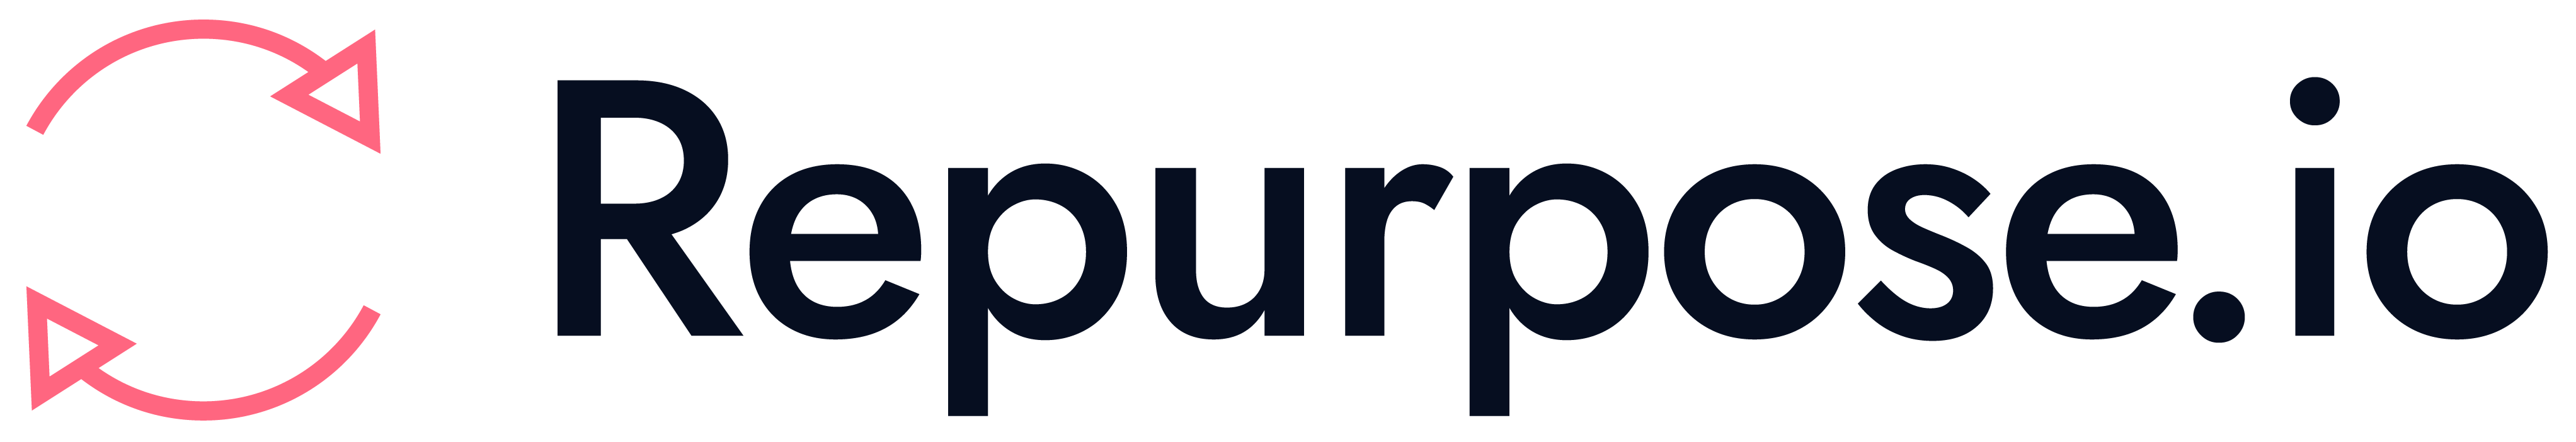 repurpose_logo